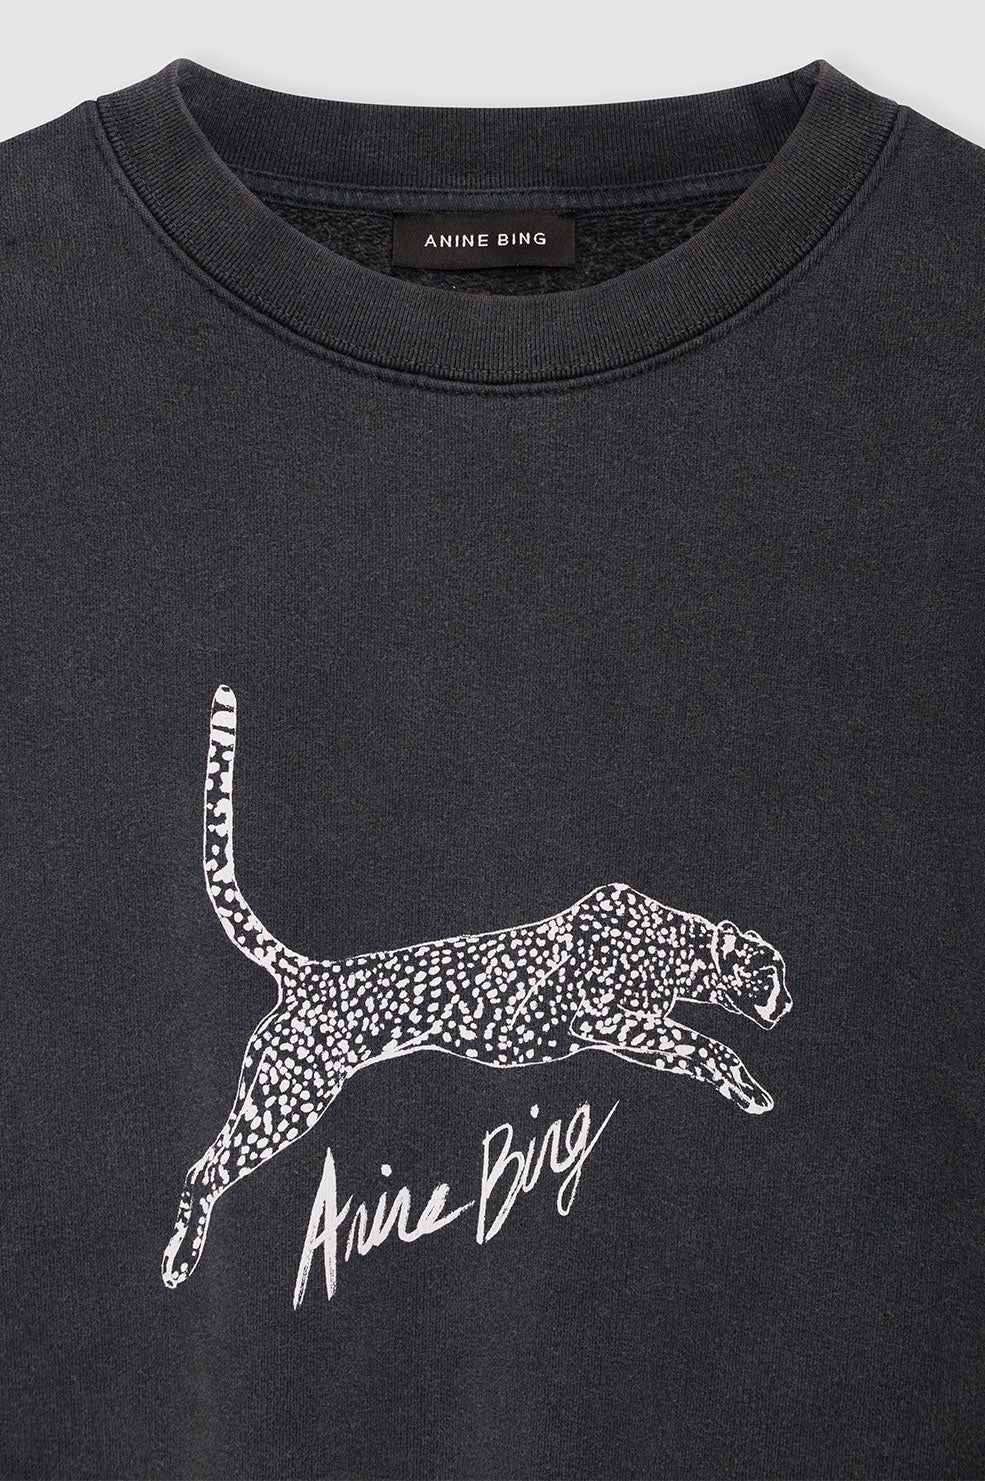 ANINE BING Spencer Sweatshirt | Spotted Leopard